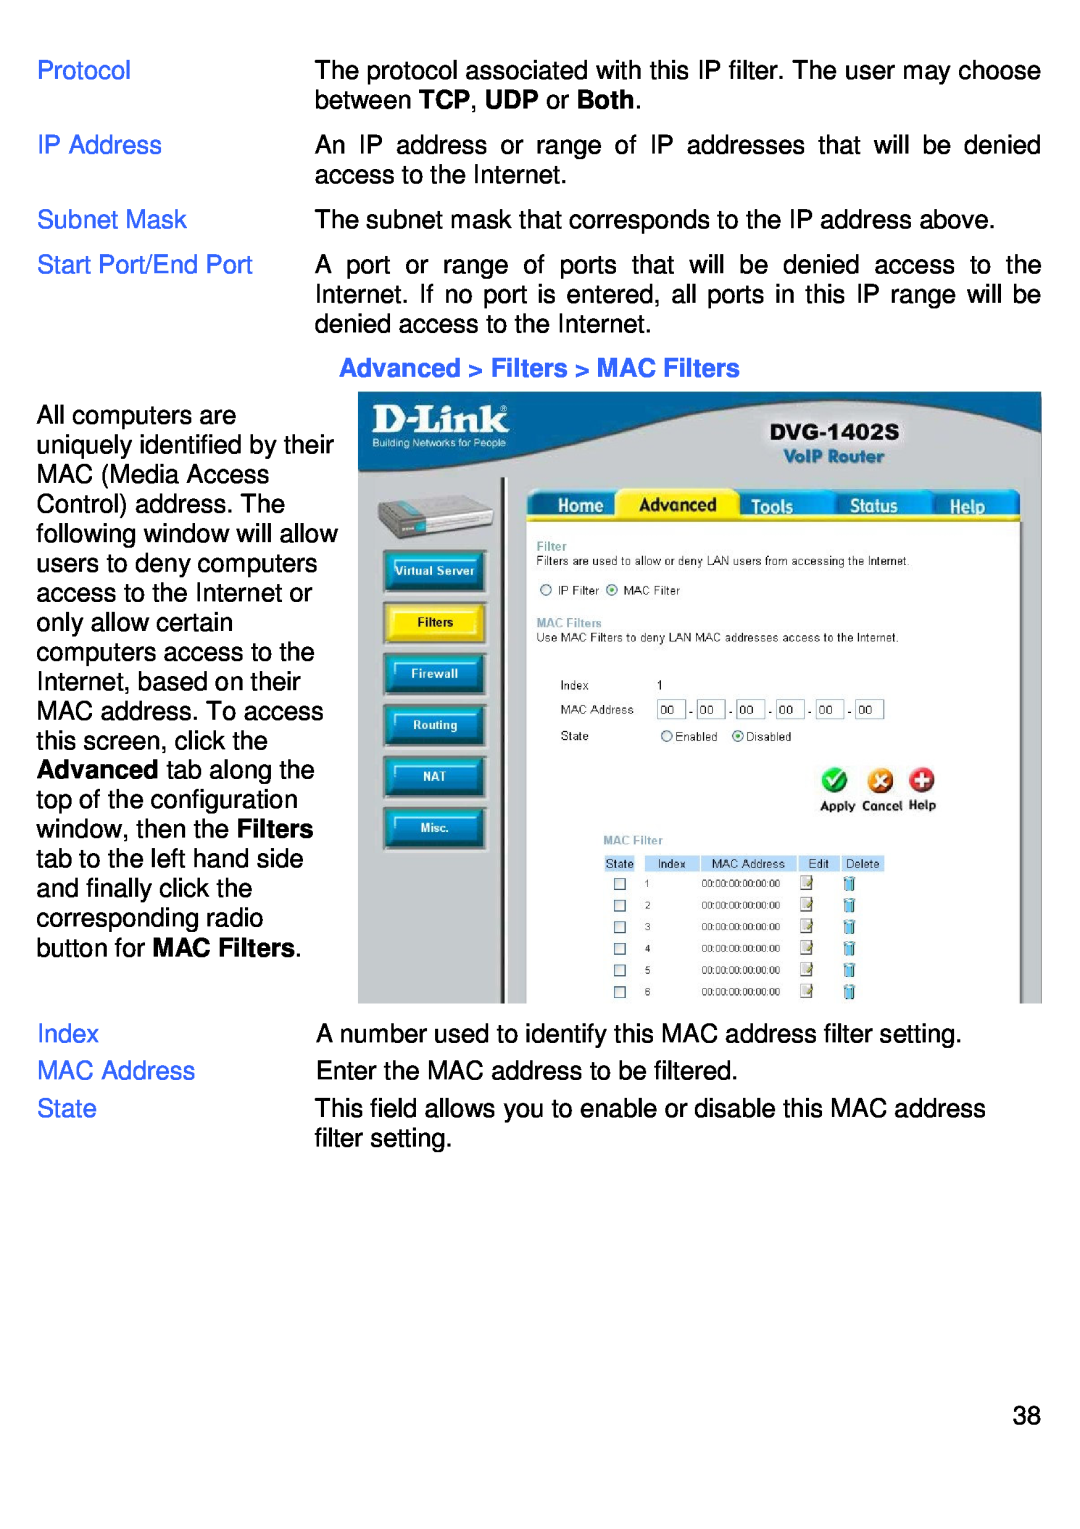 D-Link DVG-1402S Protocol, IP Address, Subnet Mask, Start Port/End Port, Advanced Filters MAC Filters, Index, MAC Address 